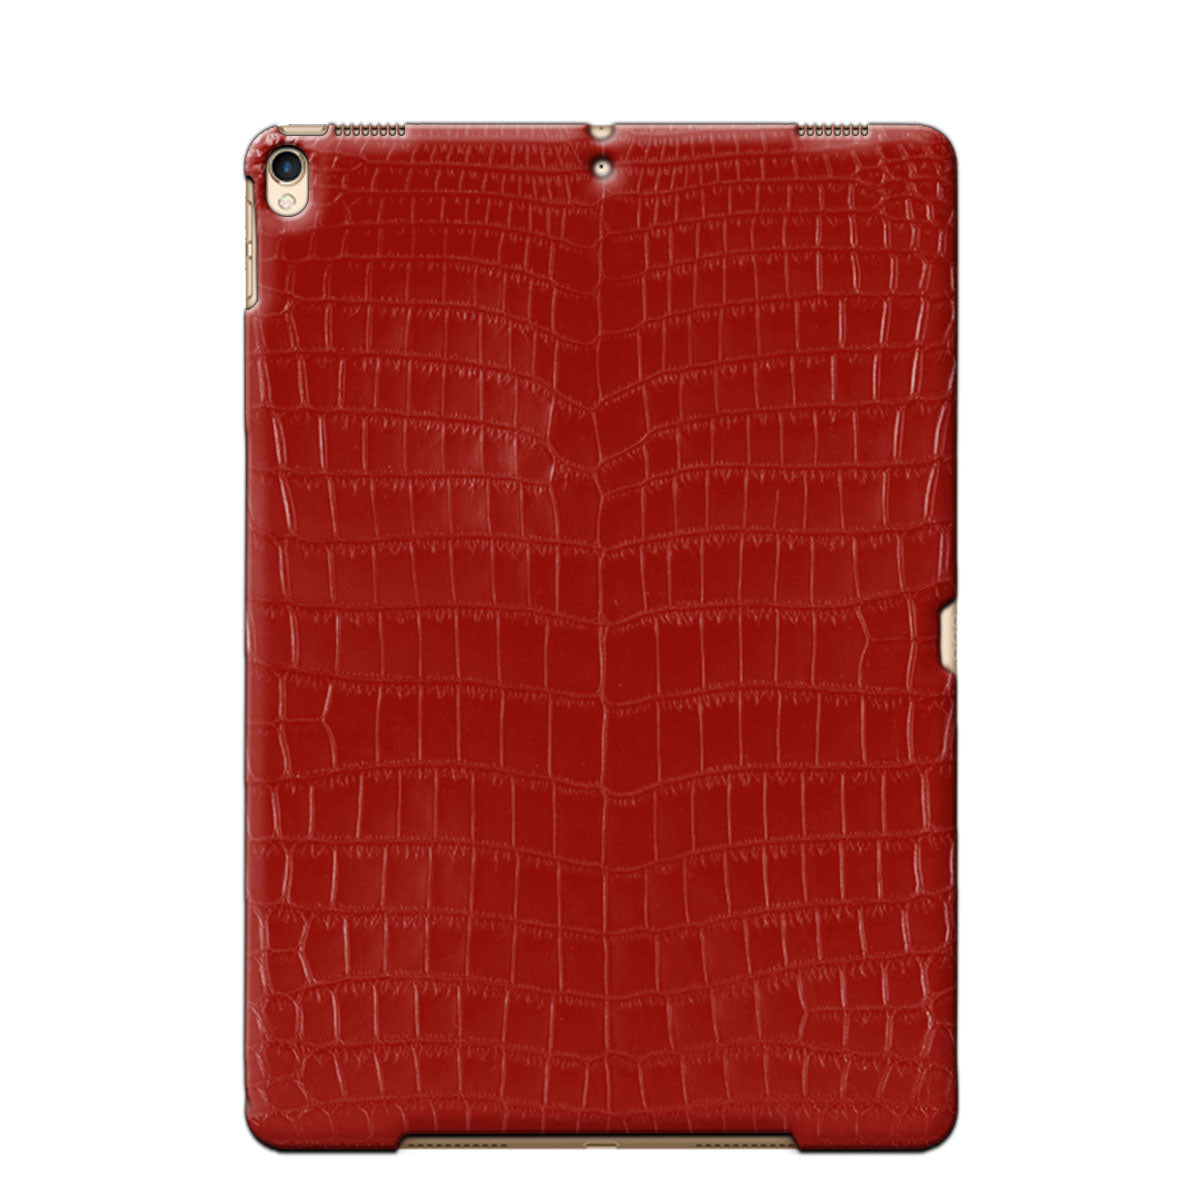 1920s Genuine Ostrich Leather Clutch Purse Handbag Folio Case 